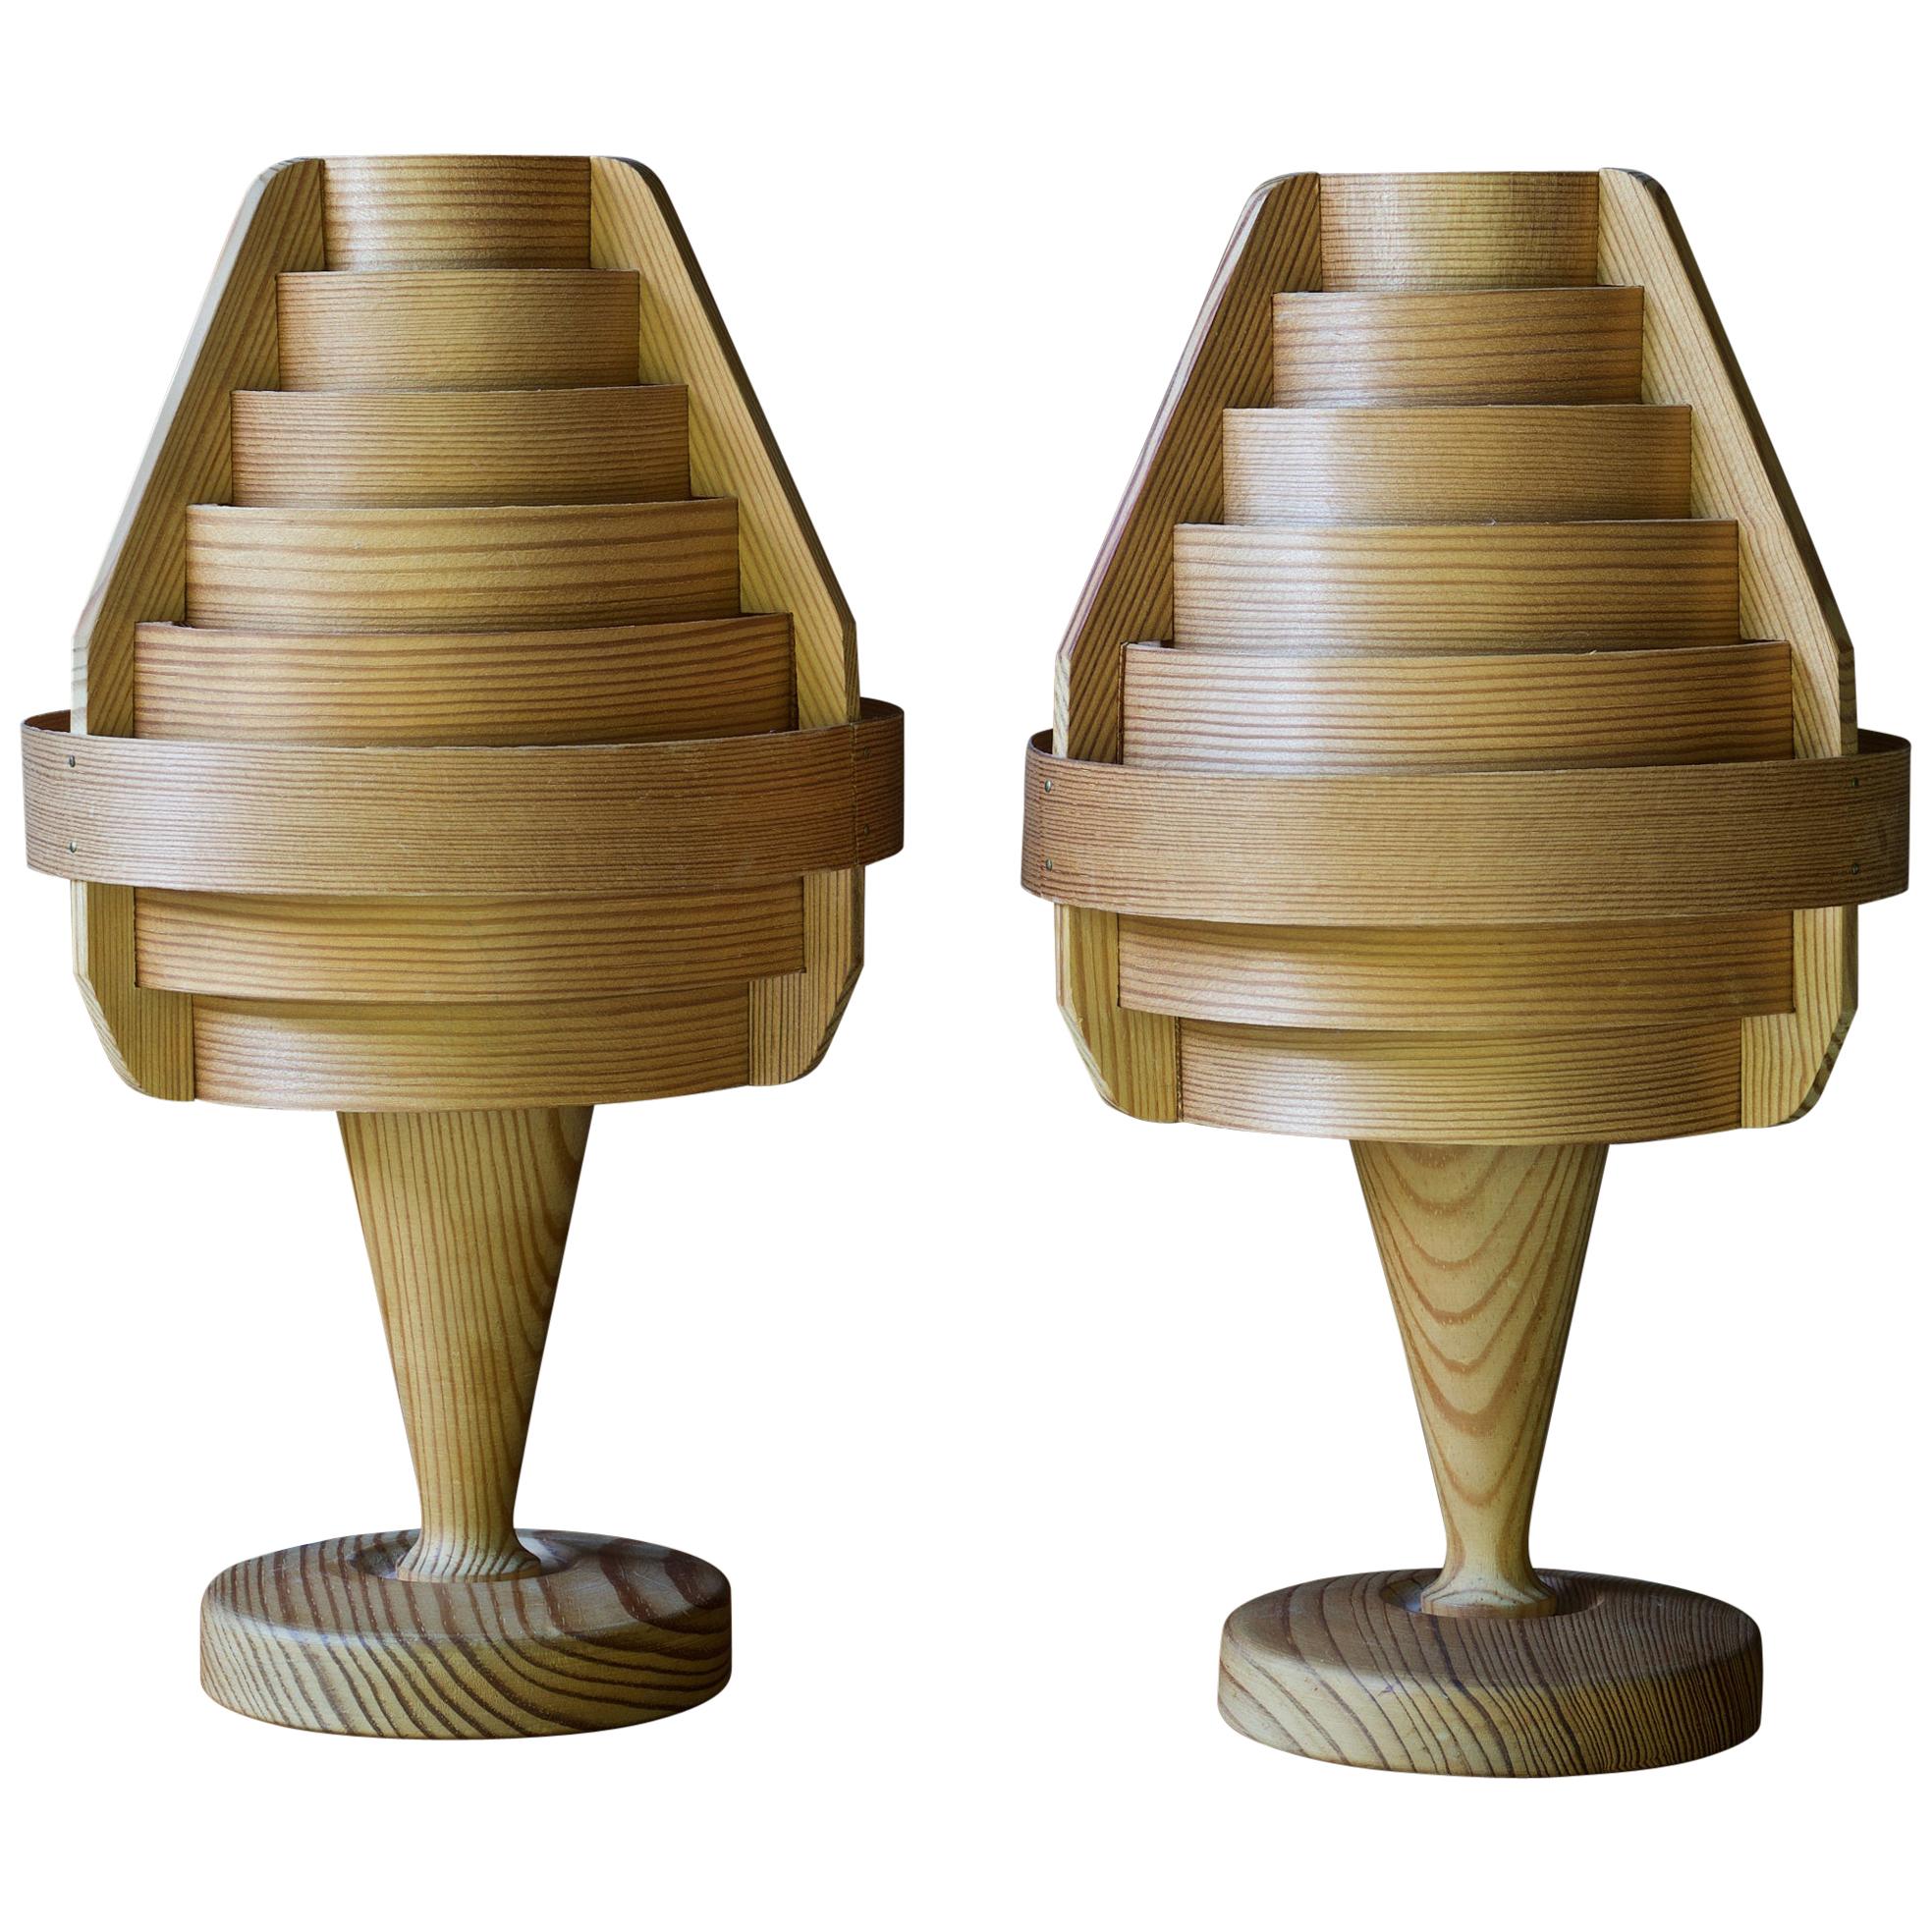 1960s Architectural Jaktstuga Pinewood Bedside Table Lamps Lanterns Chalet Lodge For Sale